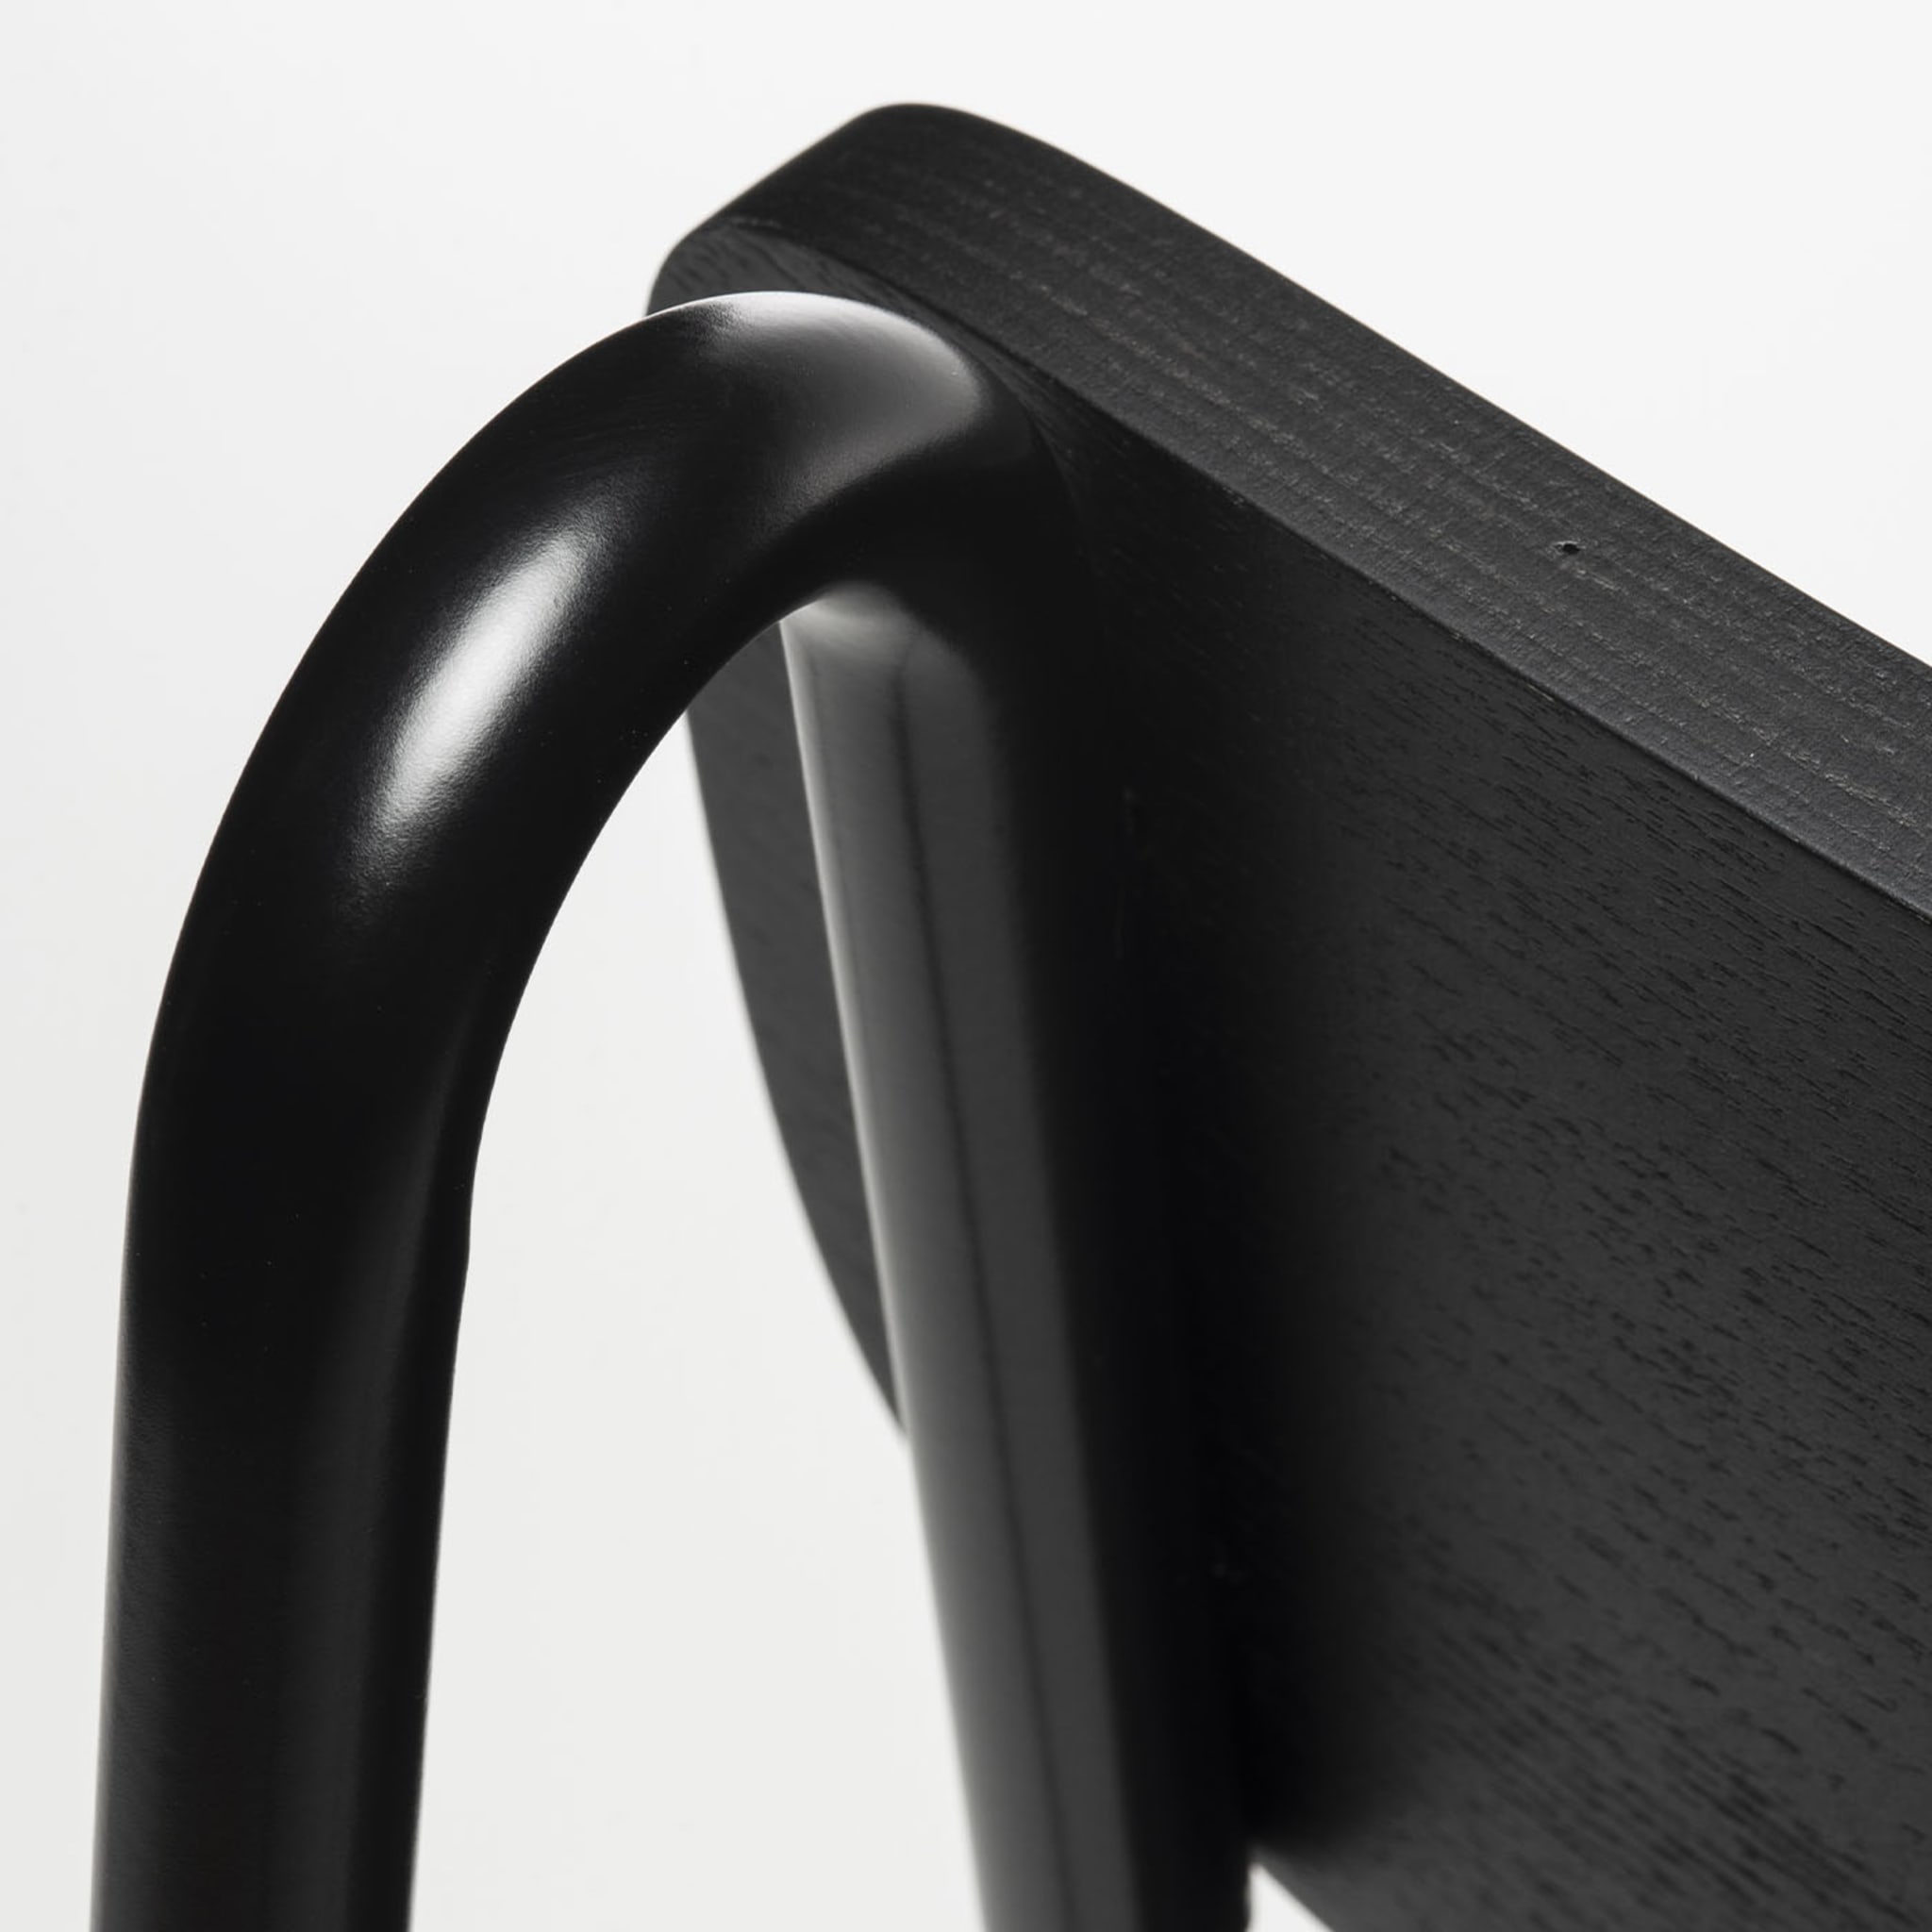 Lena S Black Chair By Designerd - Alternative view 2